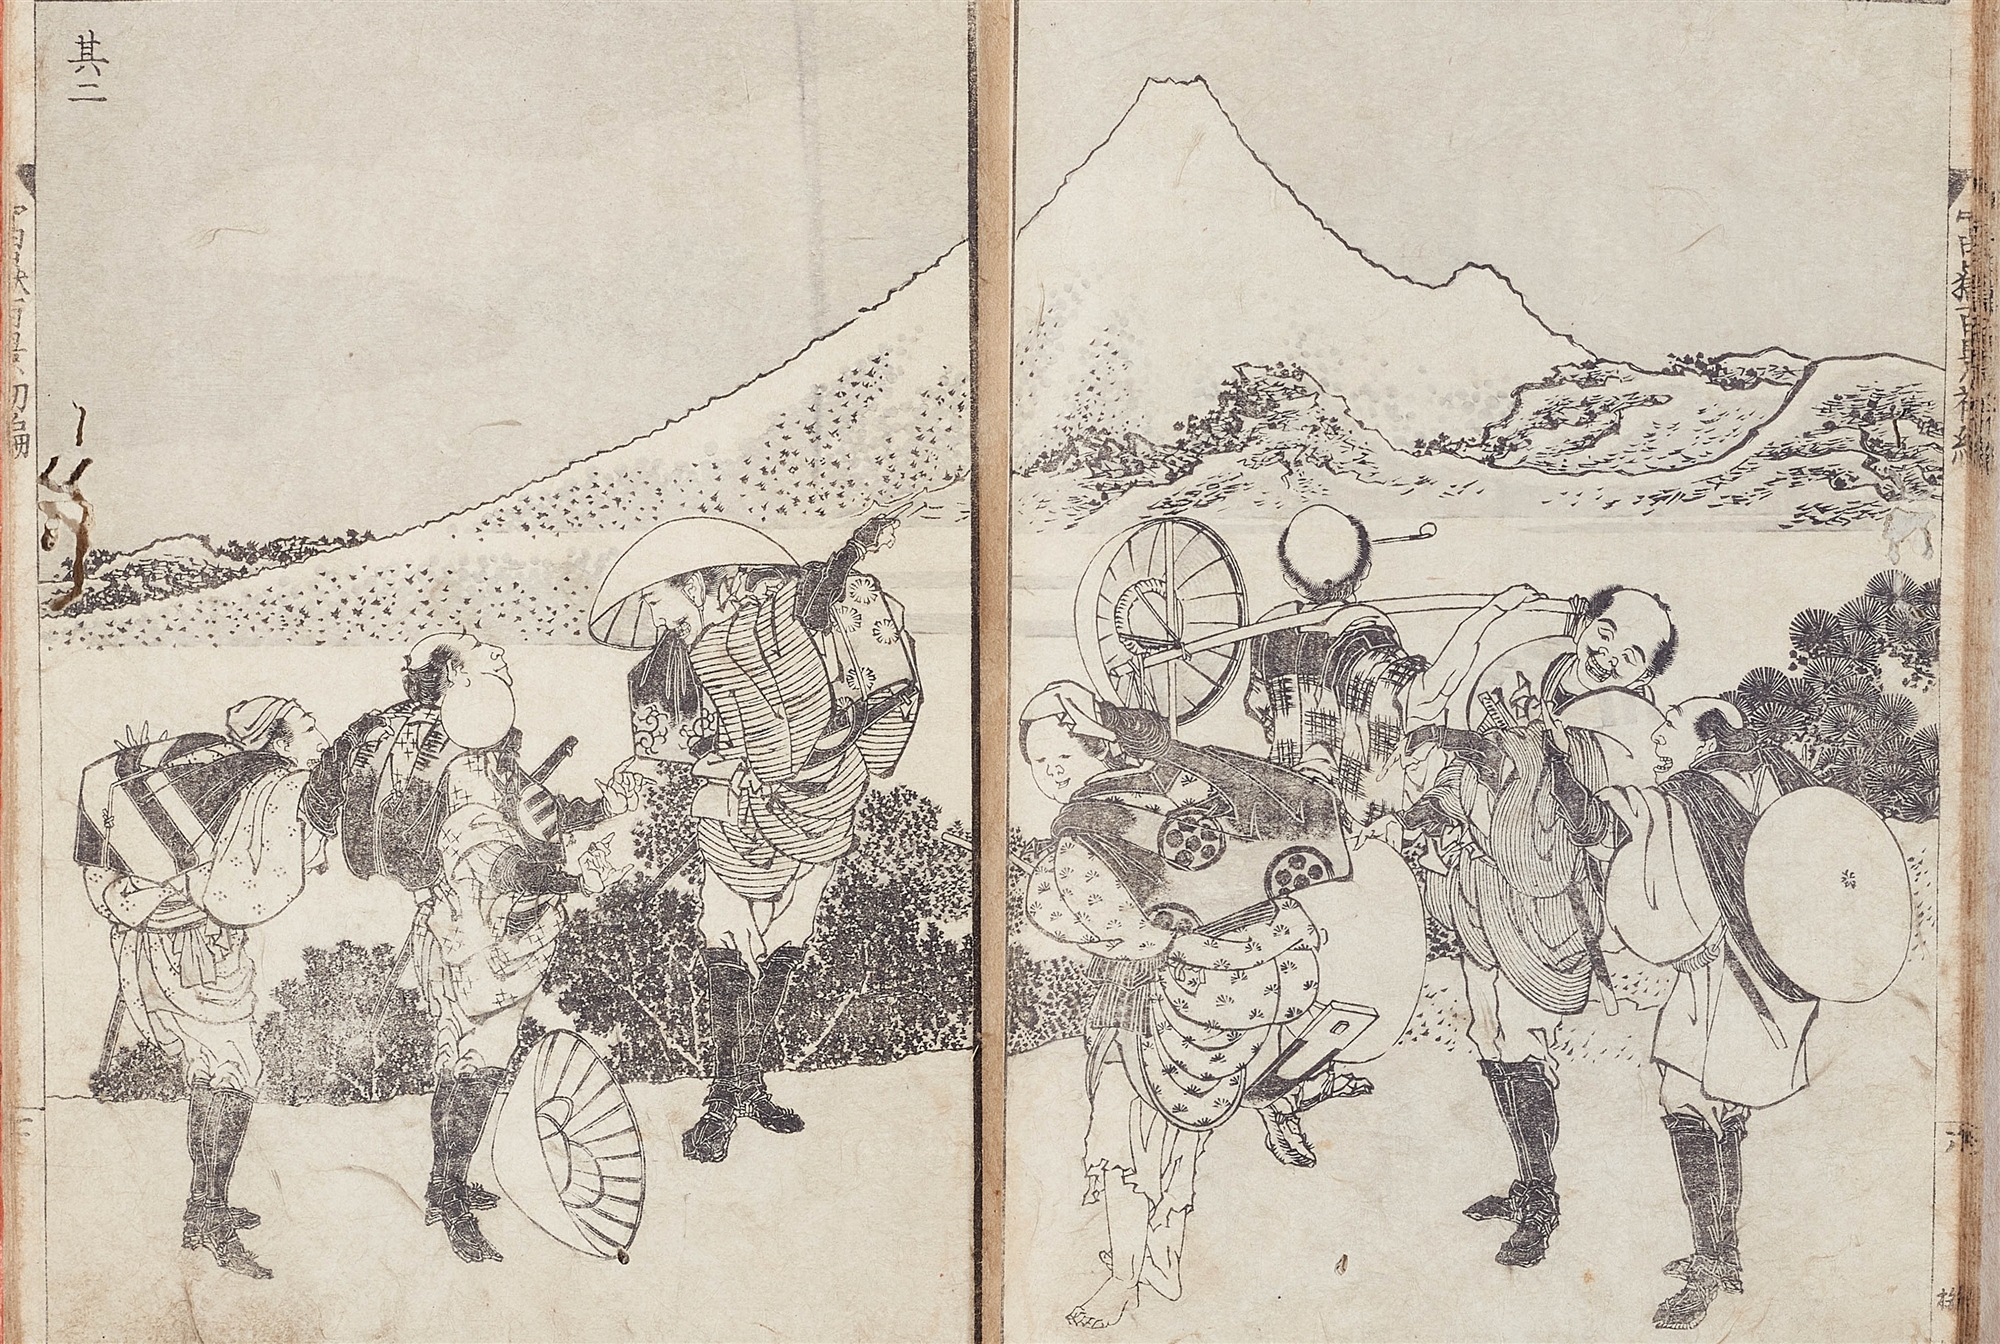 Katsushika Hokusai, Woodblock printed book